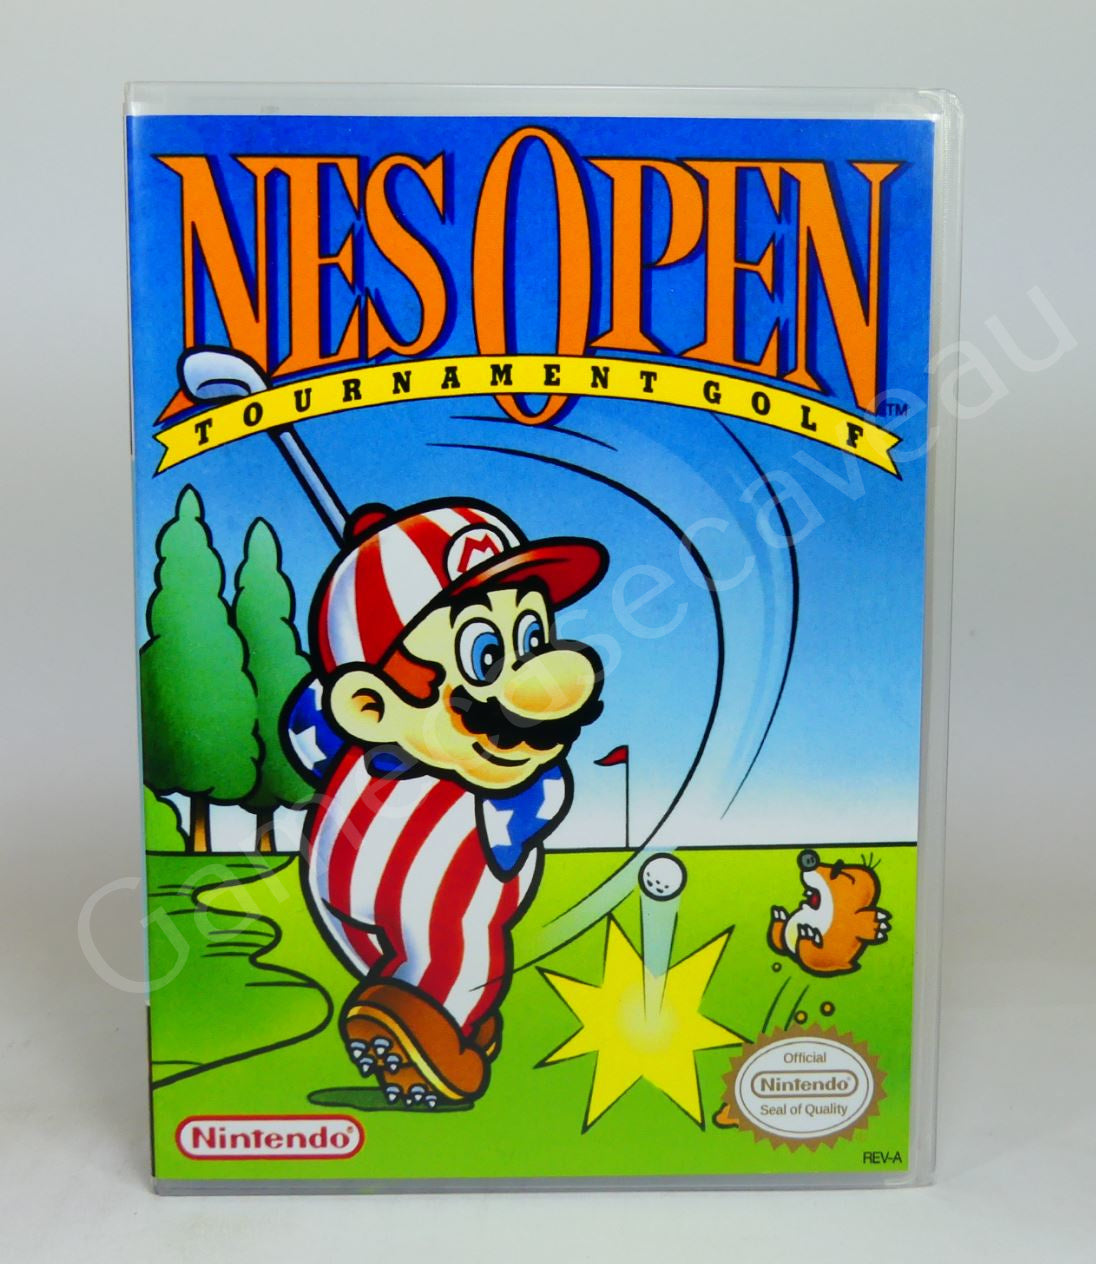 NES Open - NES Replacement Case